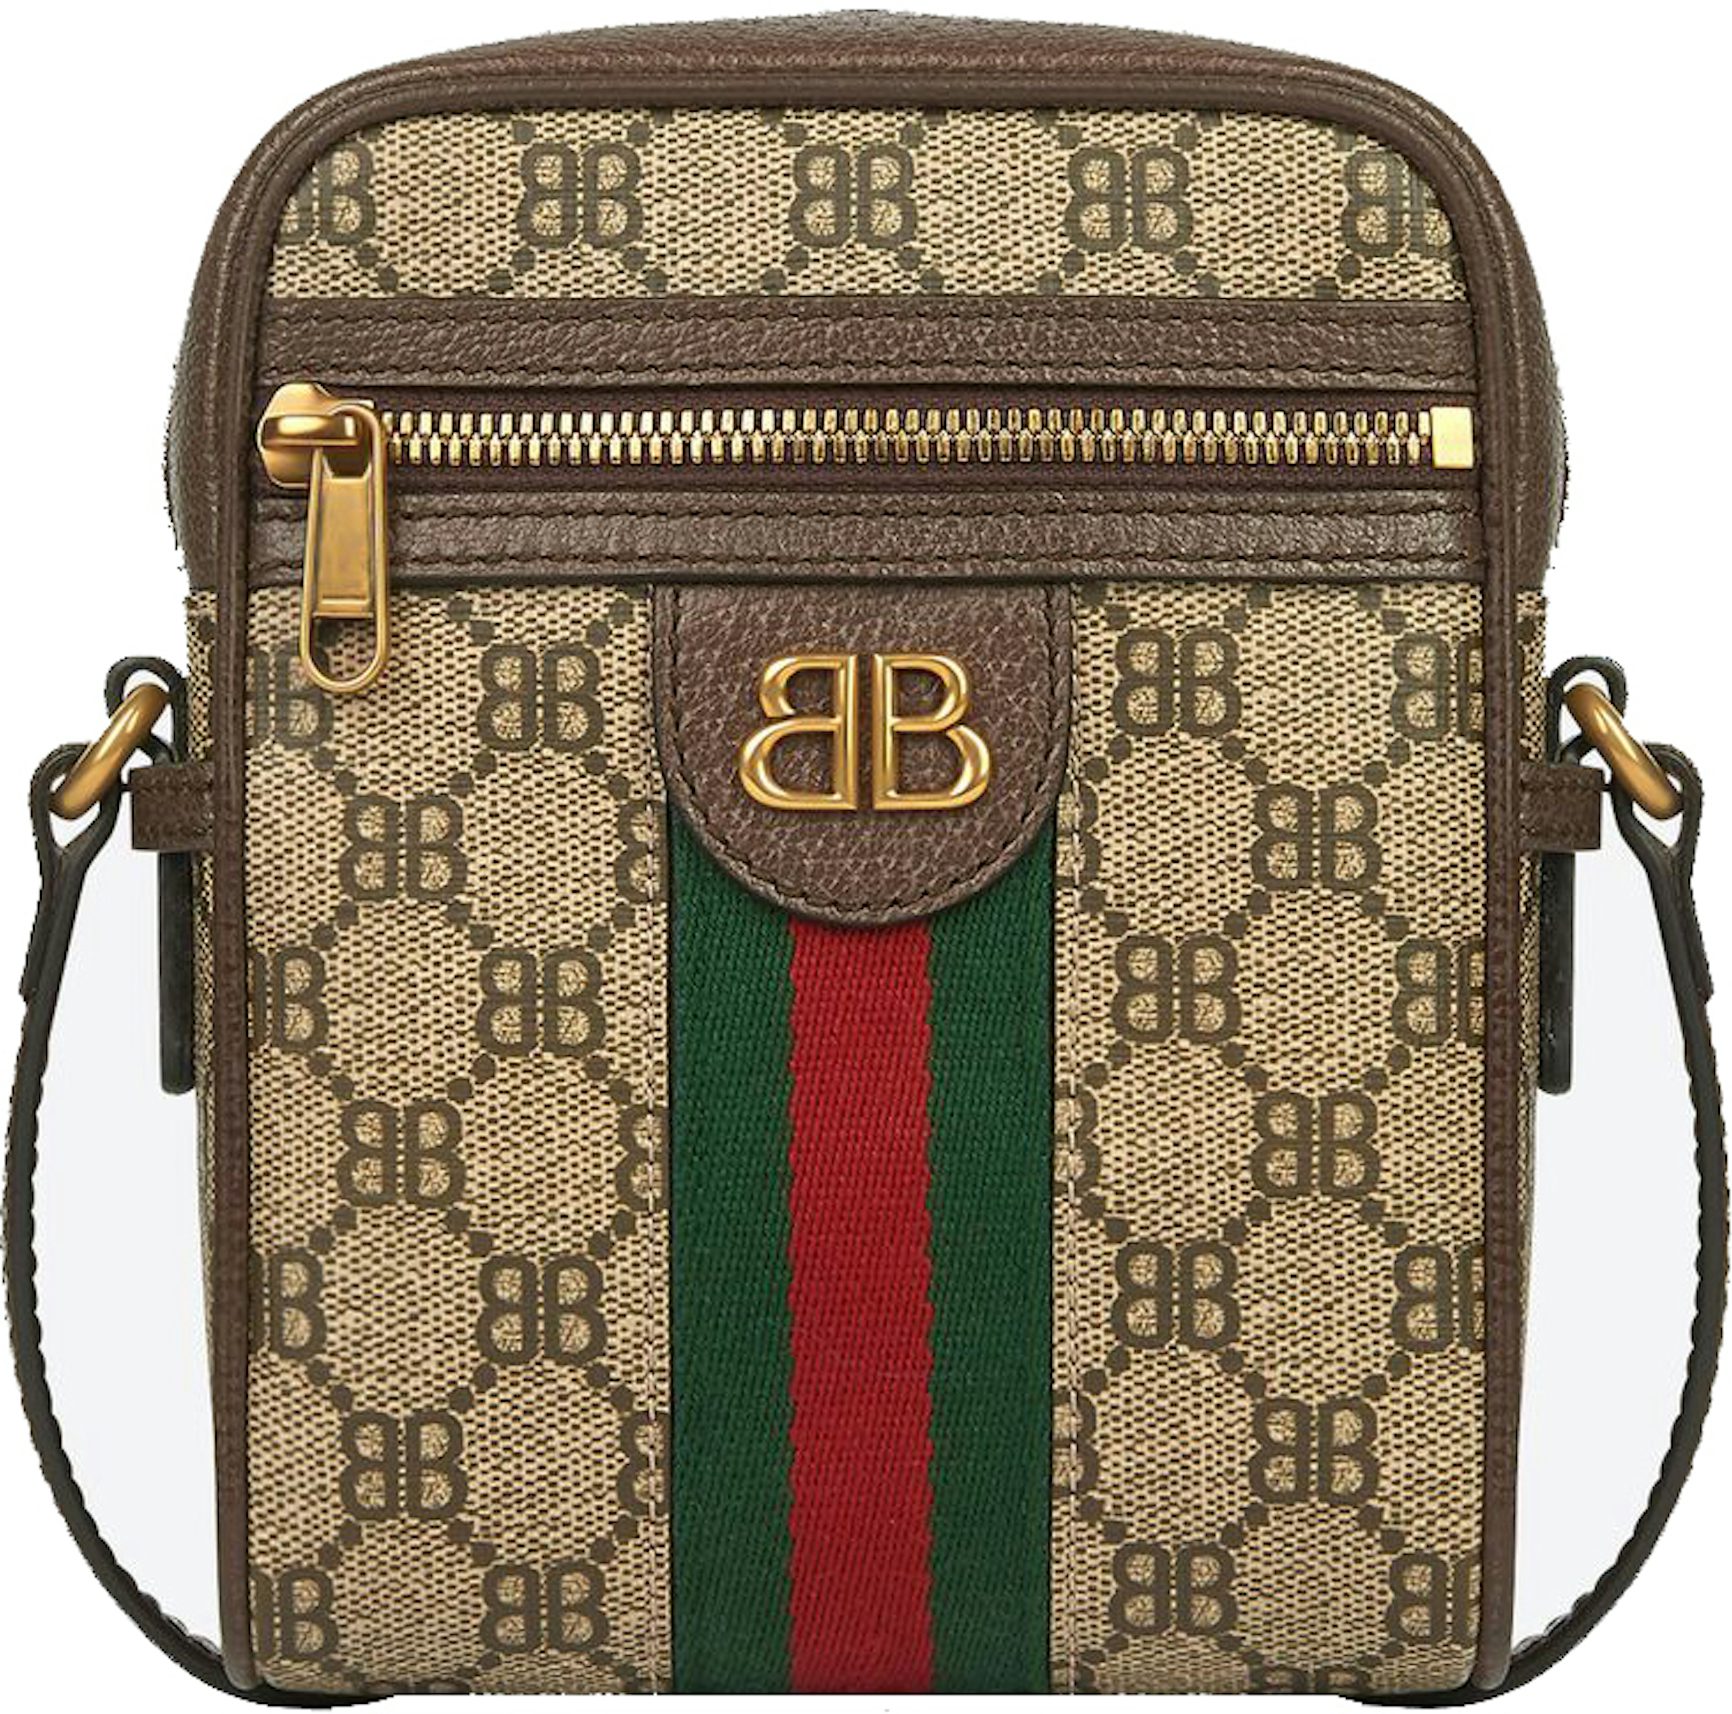 Gucci x Balenciaga The Hacker Project GG Canvas Neo Classic Bag